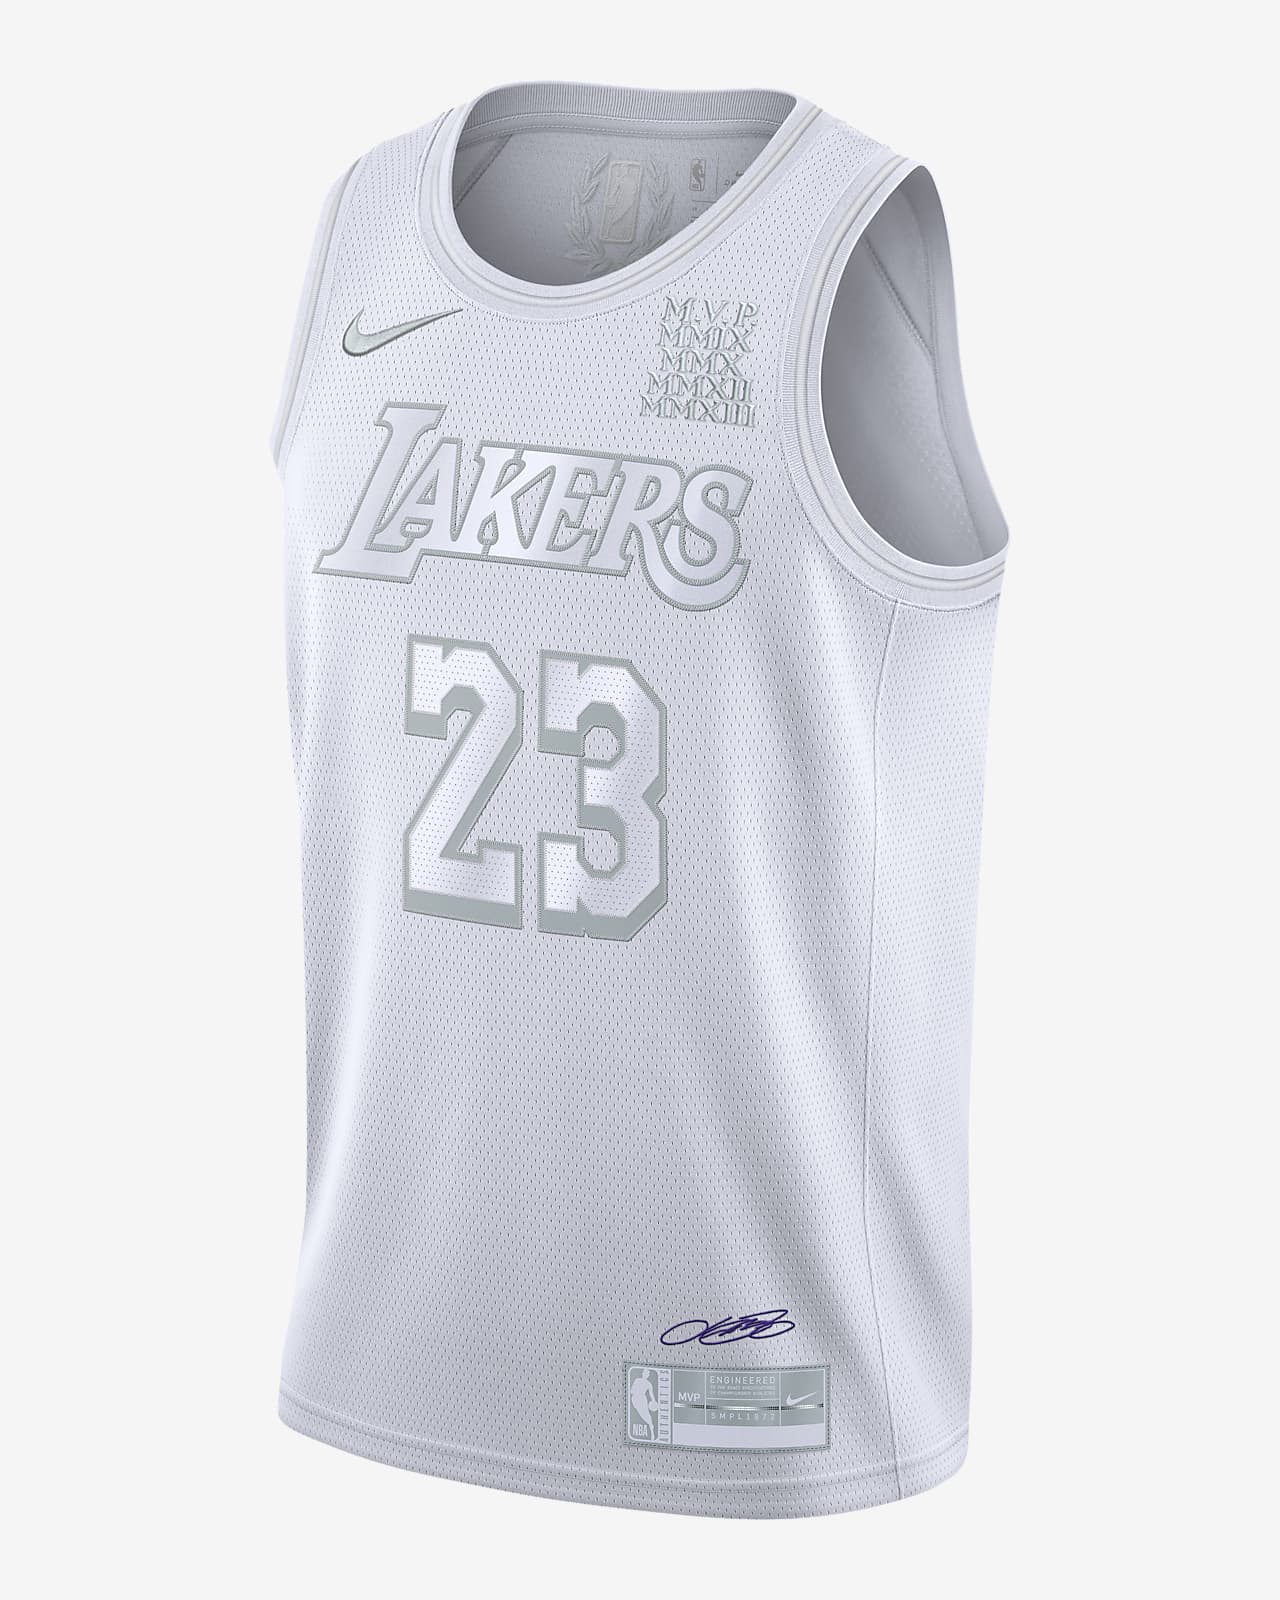 2021 LeBron James #23 Los Angeles Lakers Basketball Trikots Jersey Weiß 